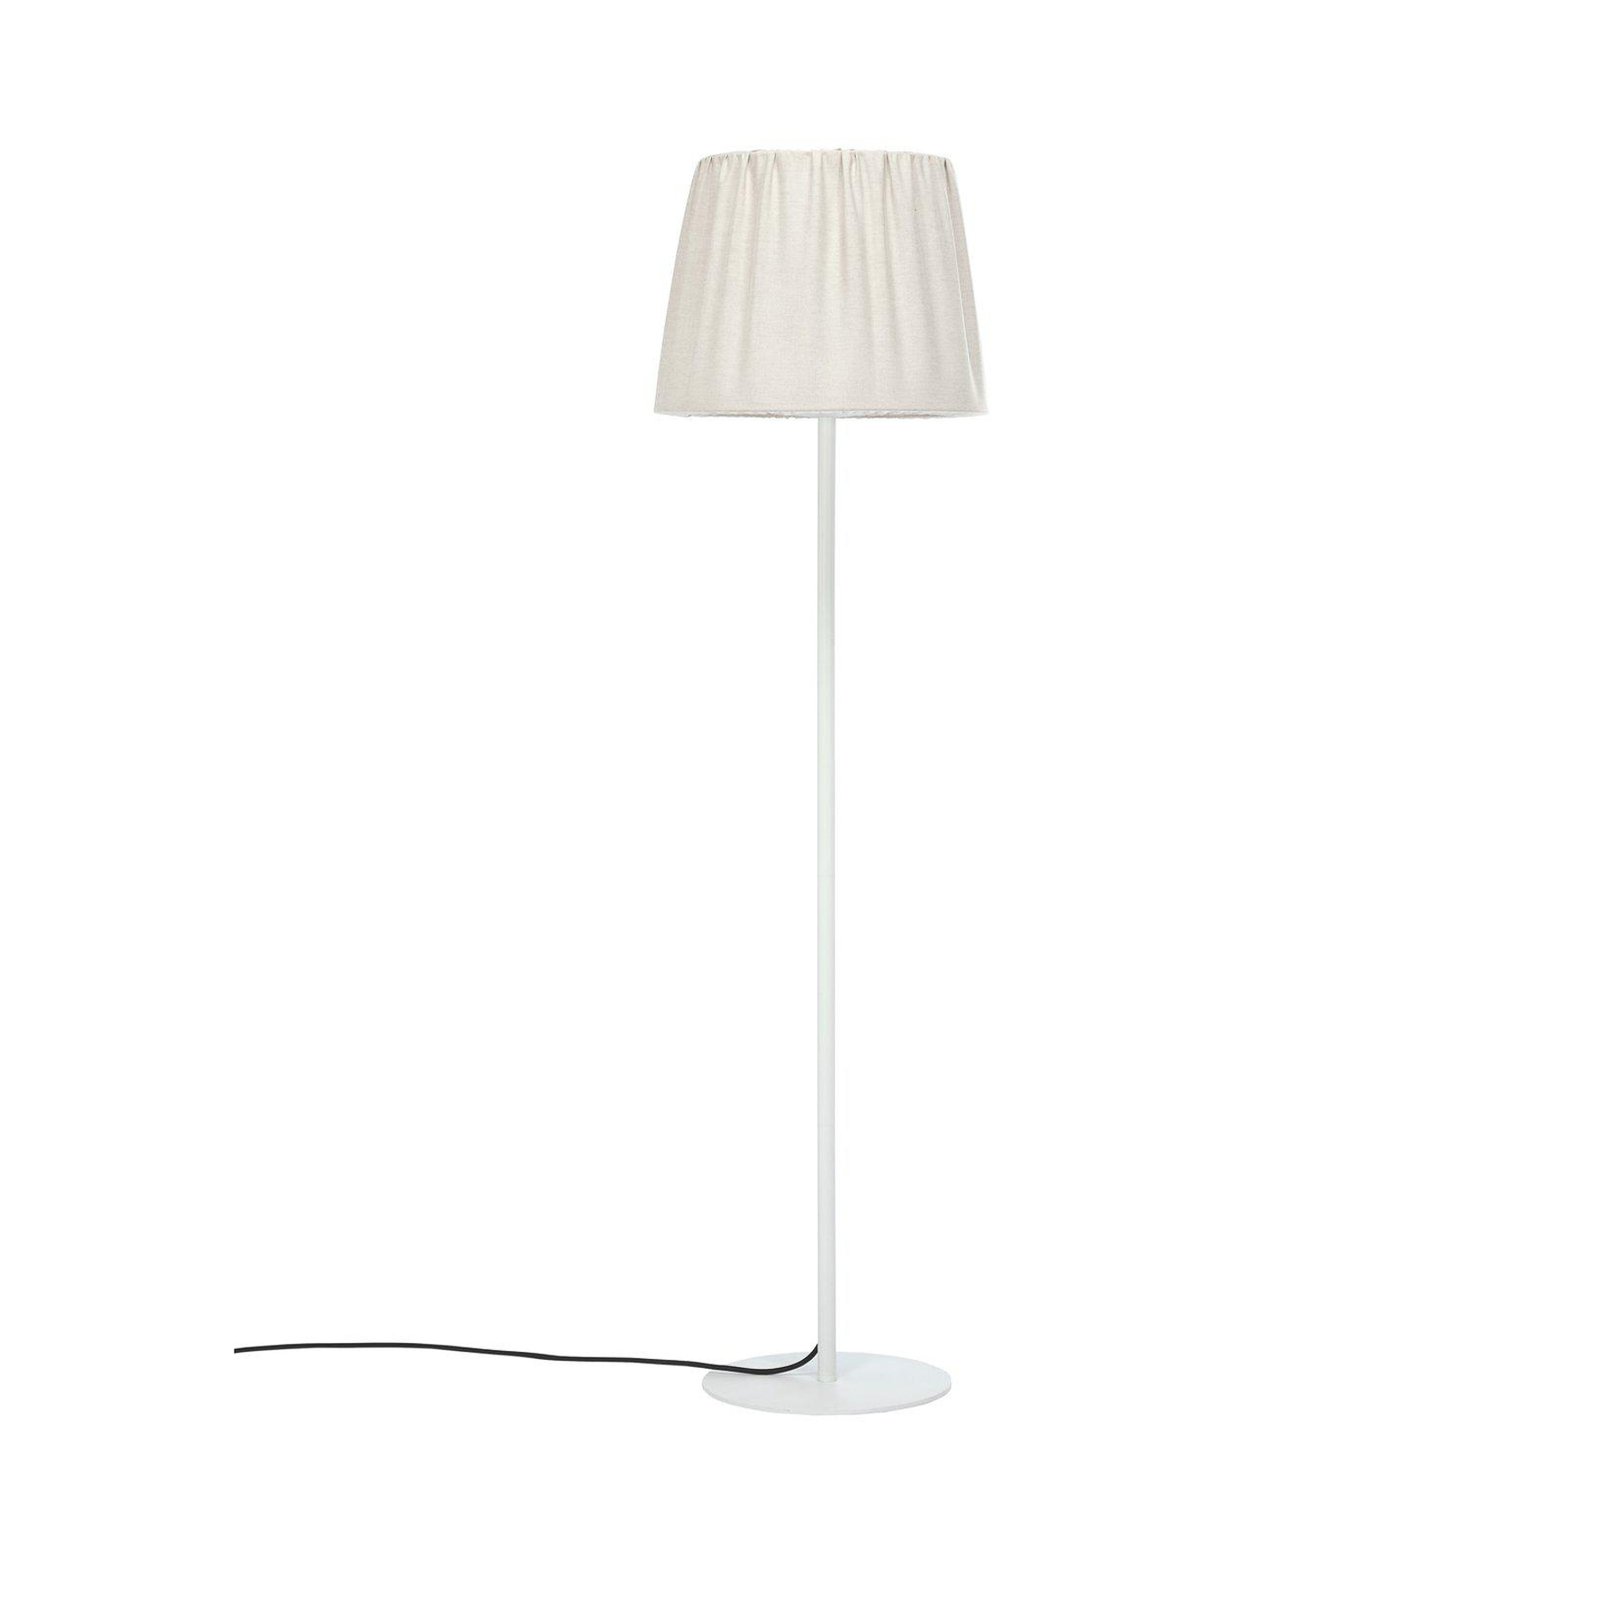 PR Home Външна подова лампа Agnar, бяла/бежова, 140 cm